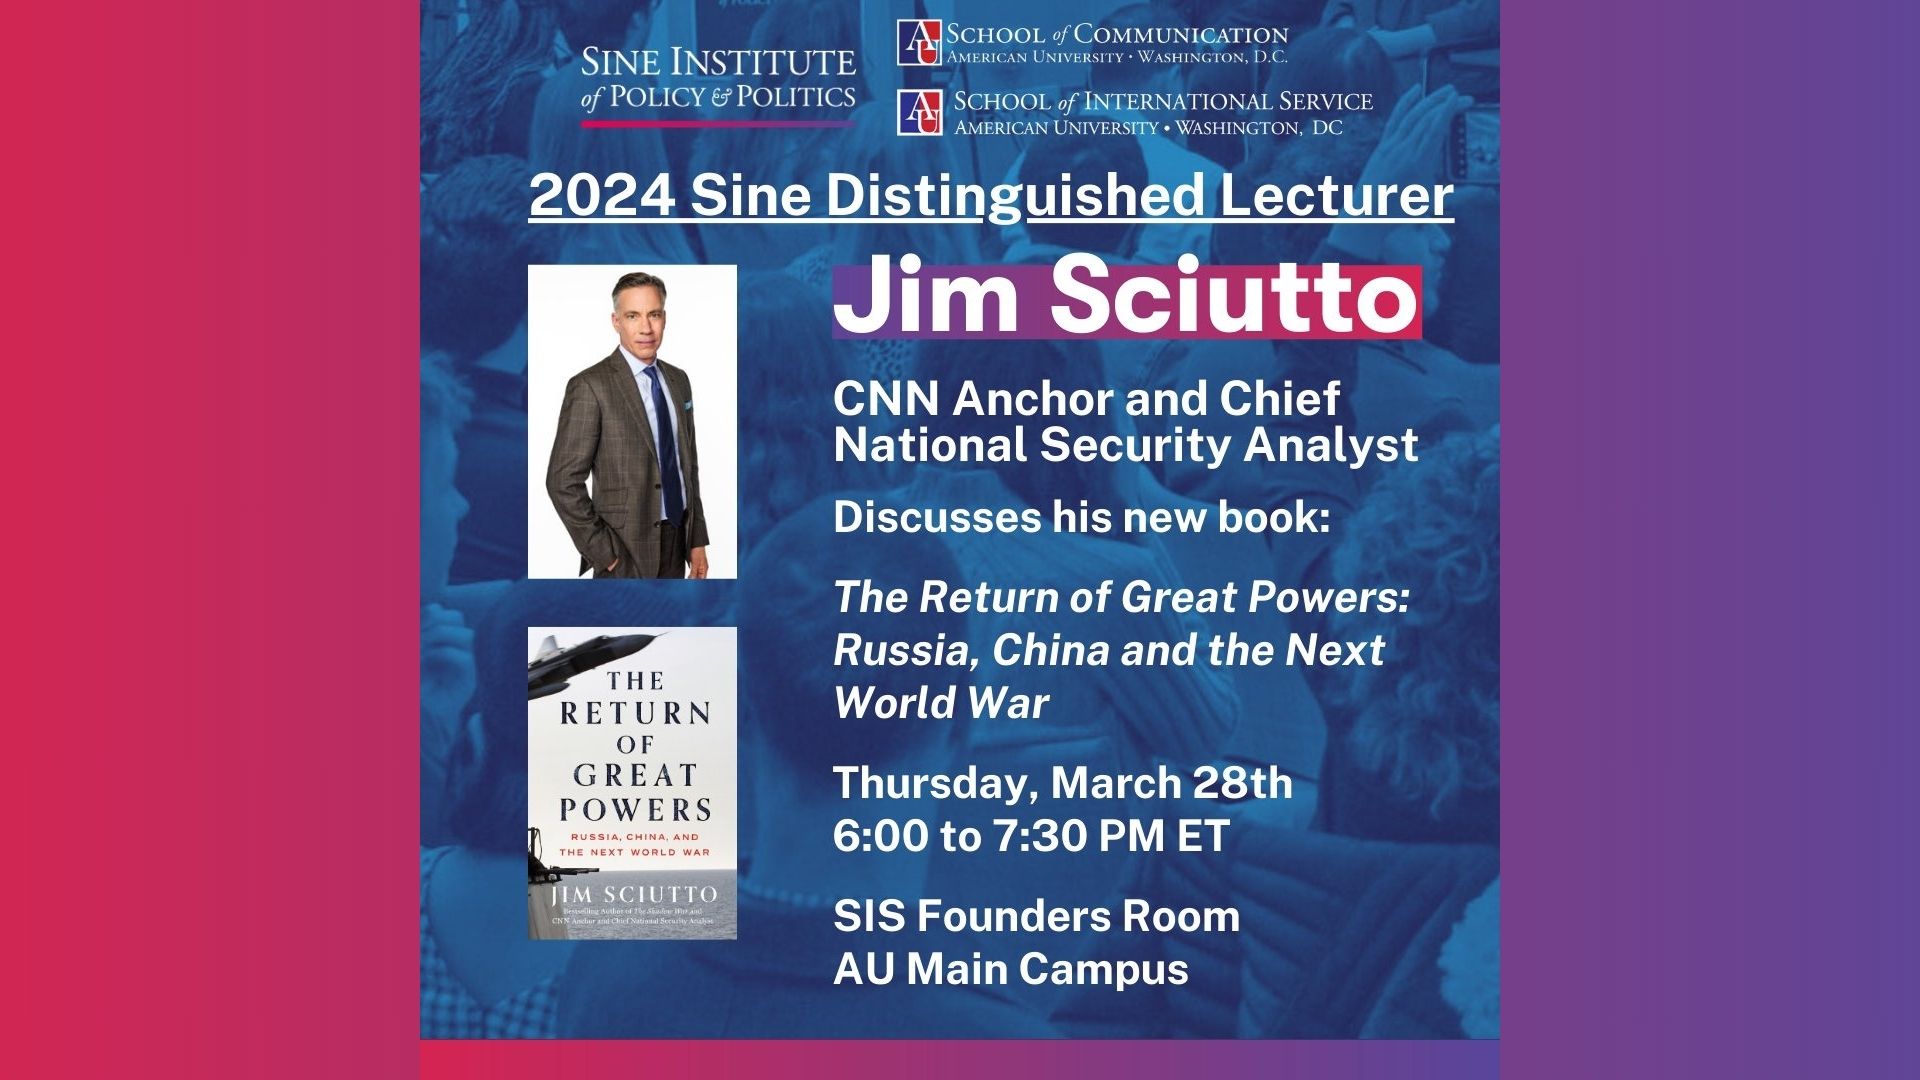 2024 Sine Institute Distinguished Lecturer Jim Sciutto